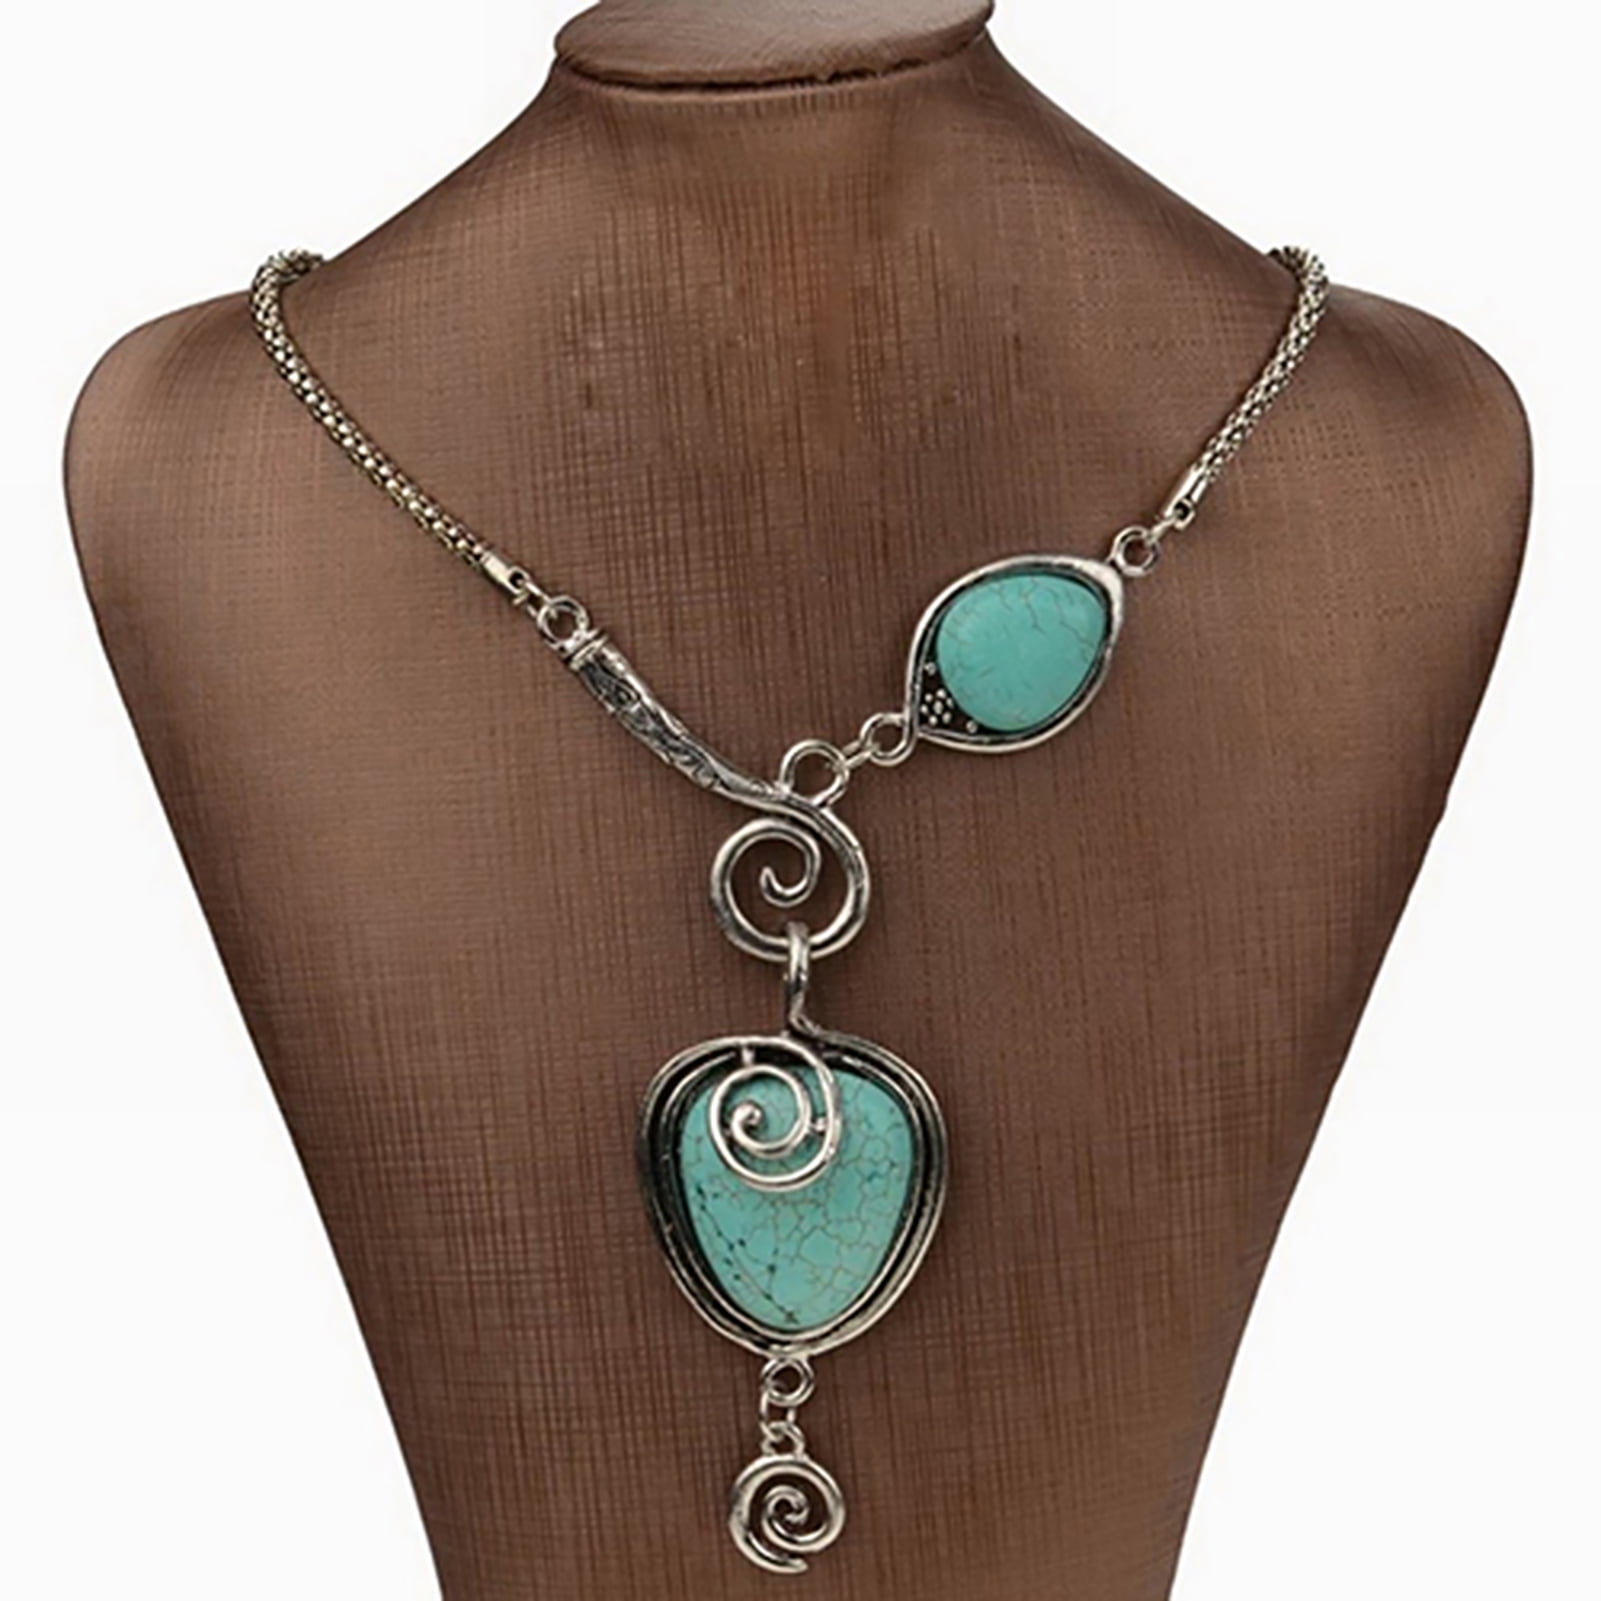 Vintage Retro Turquoise Pendant Boho Turtle Pendant  Necklace Women Jewelry Gift 